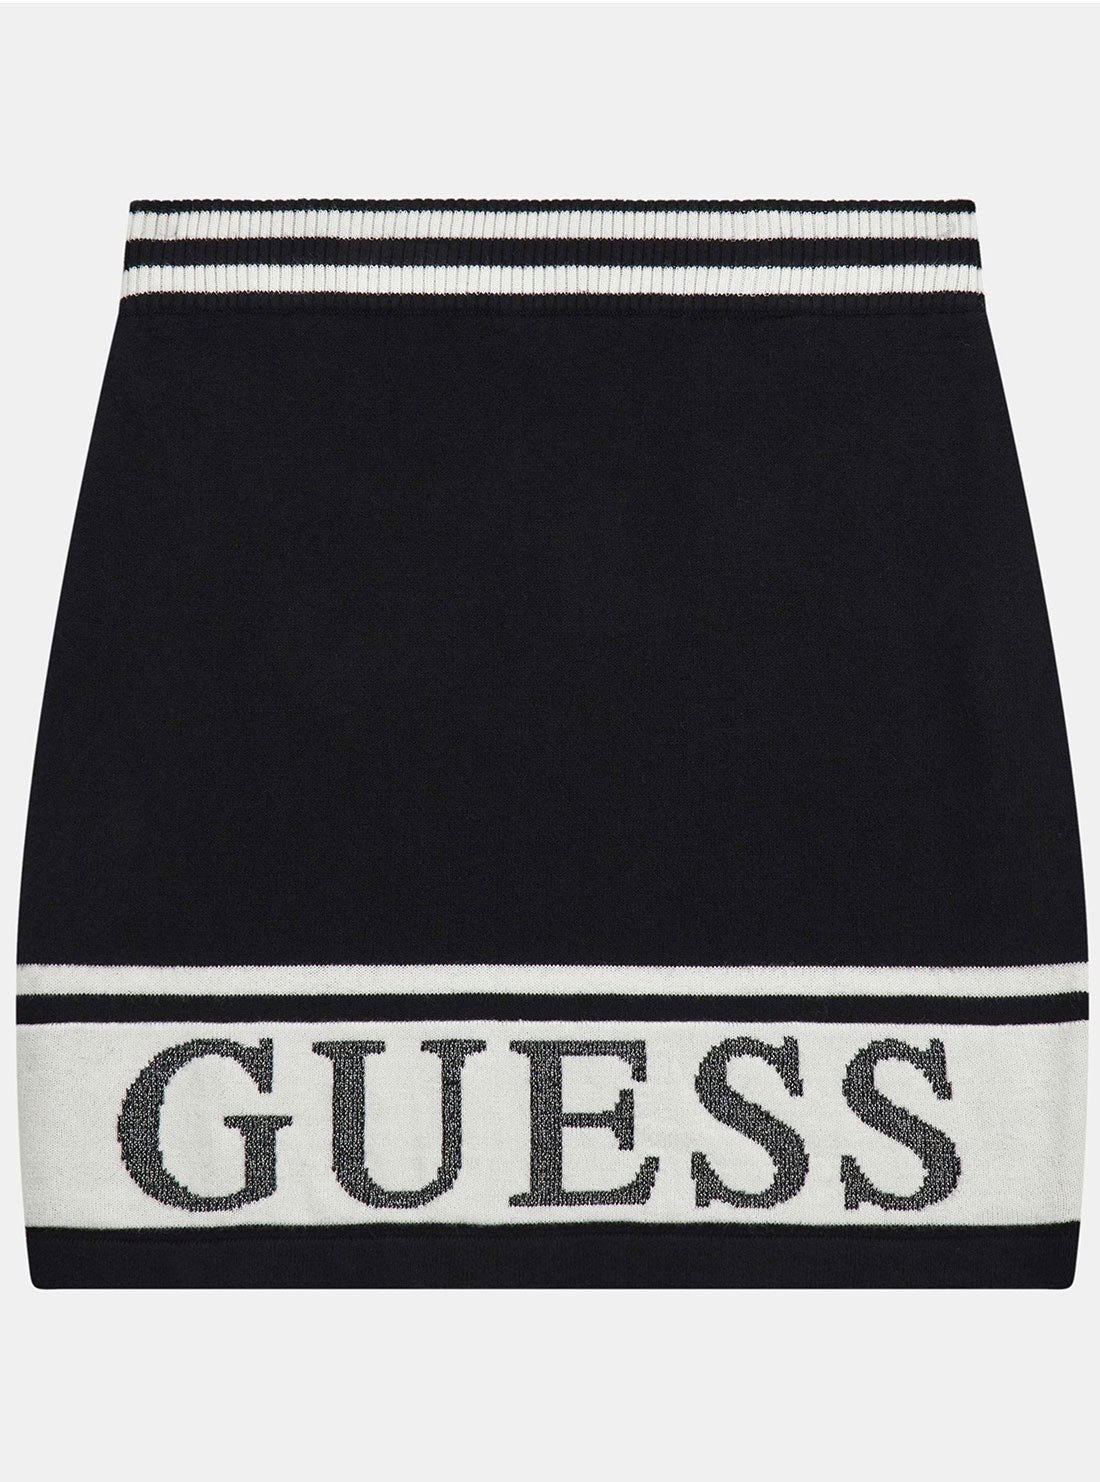 GUESS Black Sweater Midi Skirt (7-16) back view